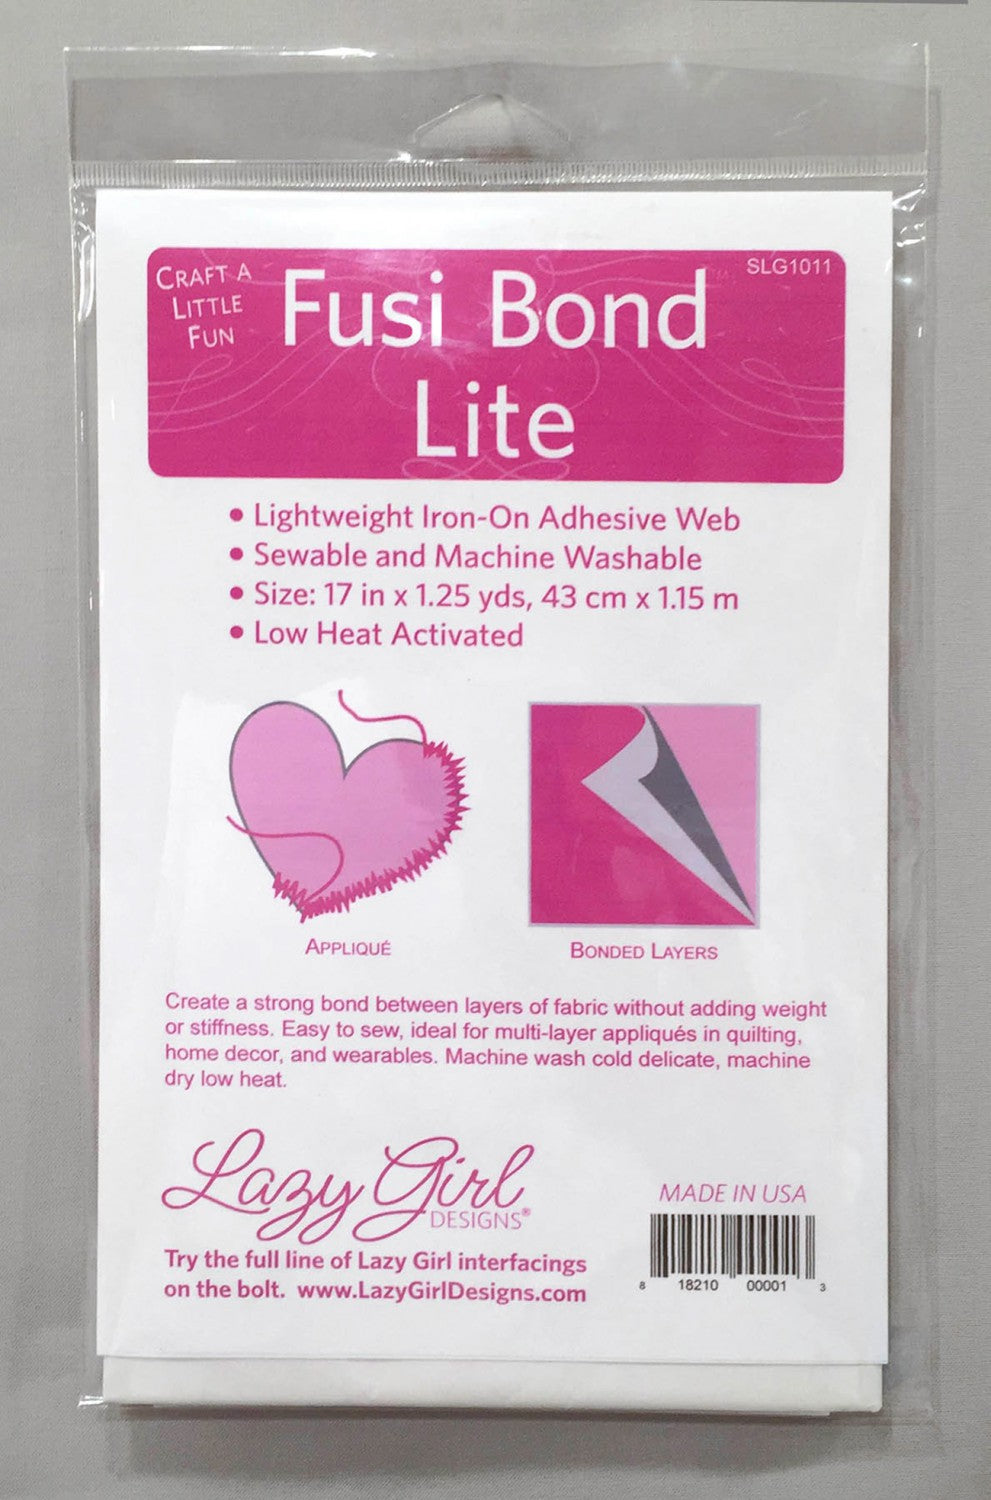 Fusi-Bond Lite Fusible Adhesive Web